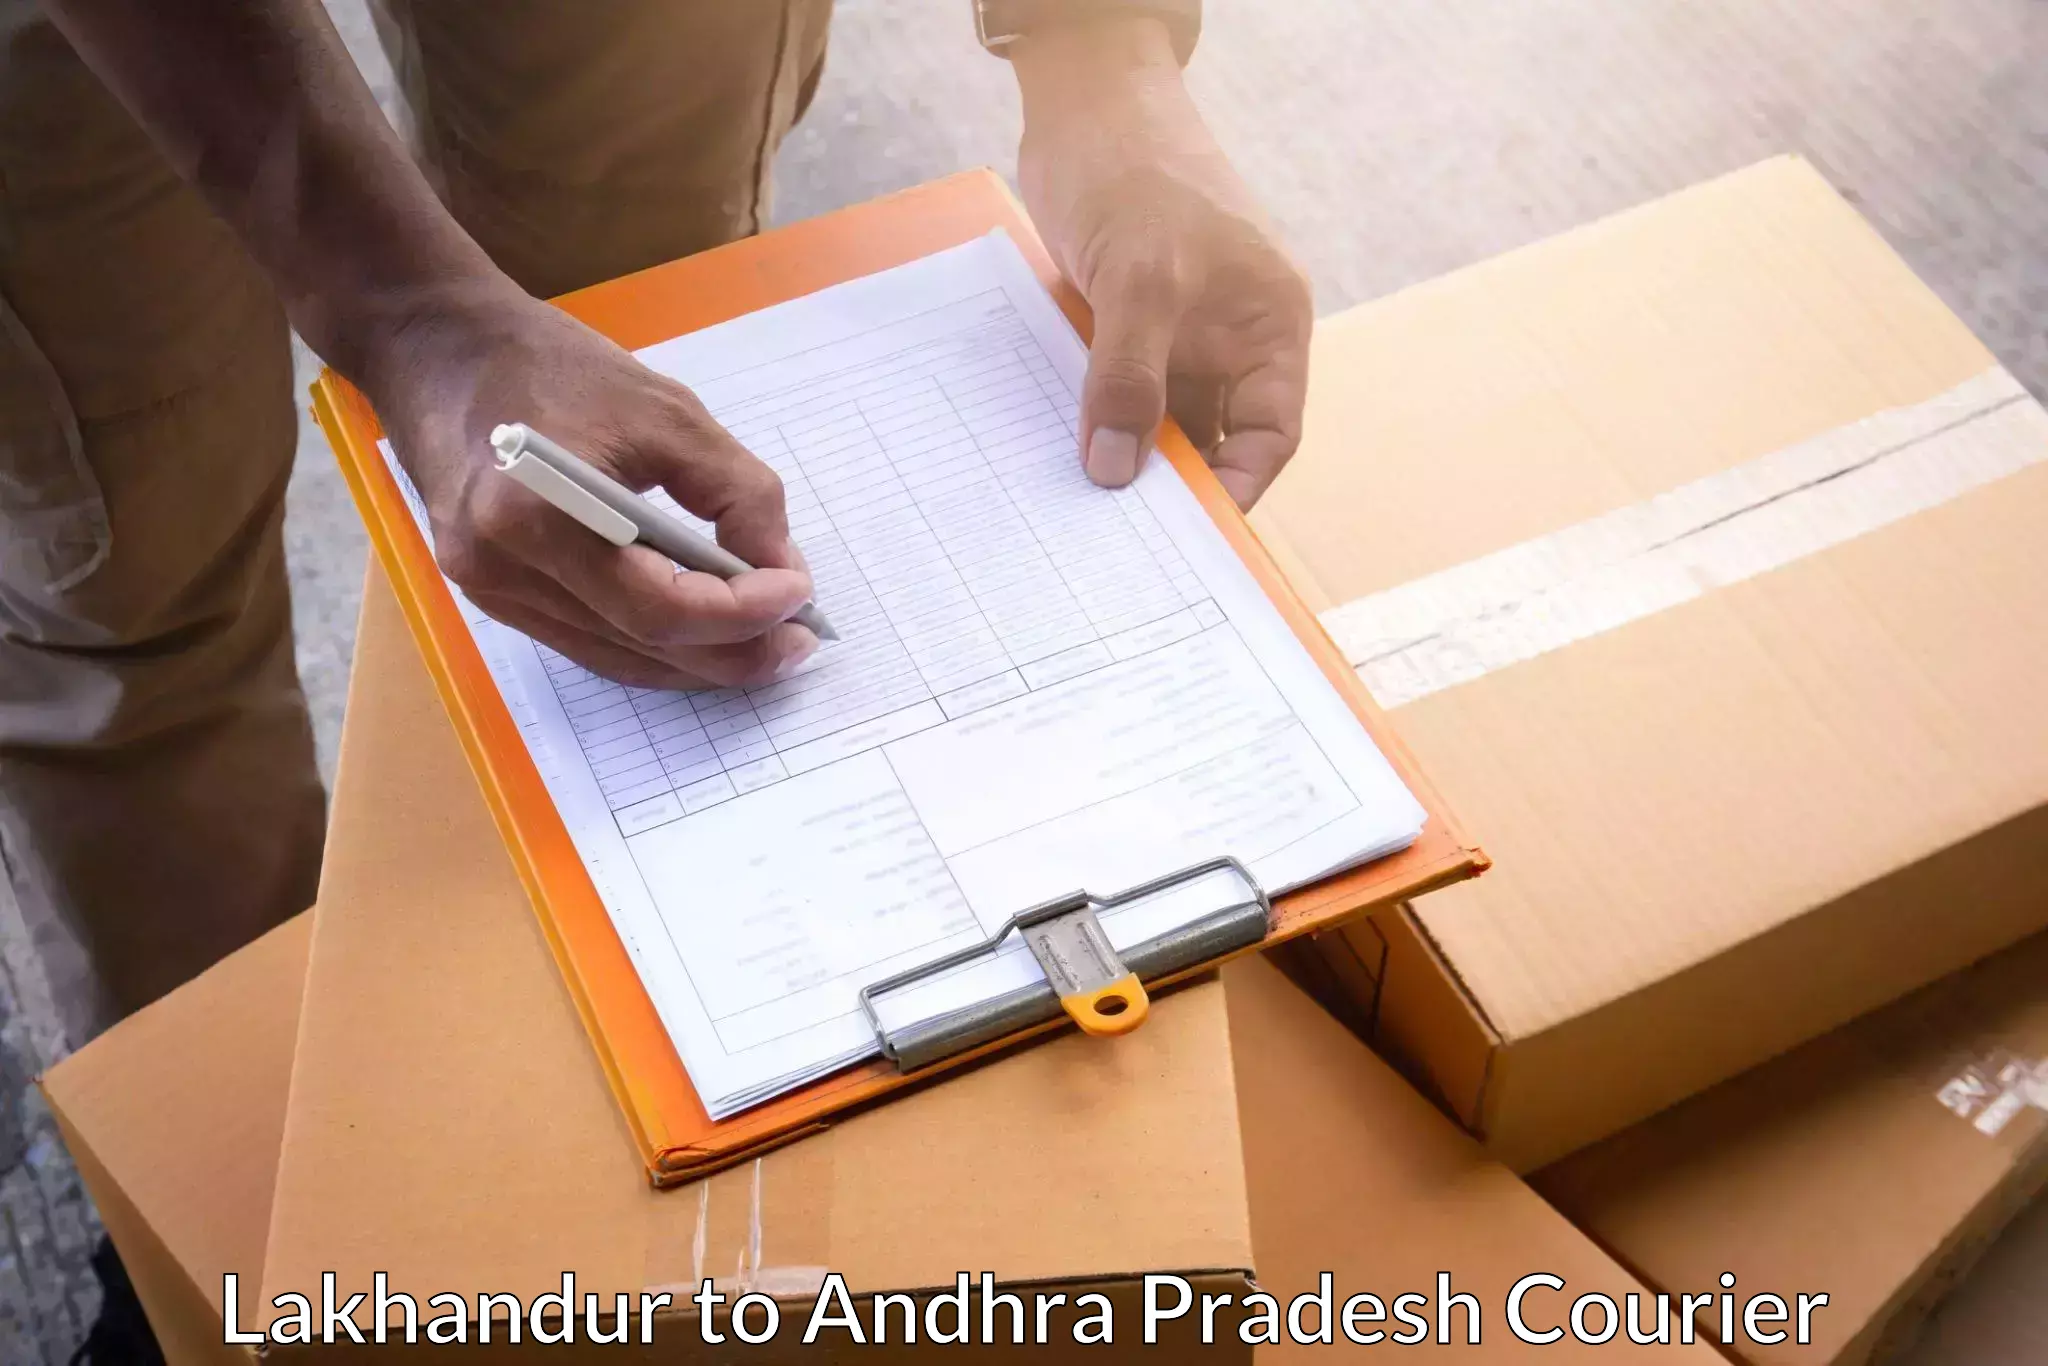 Versatile courier offerings Lakhandur to Cumbum Prakasam